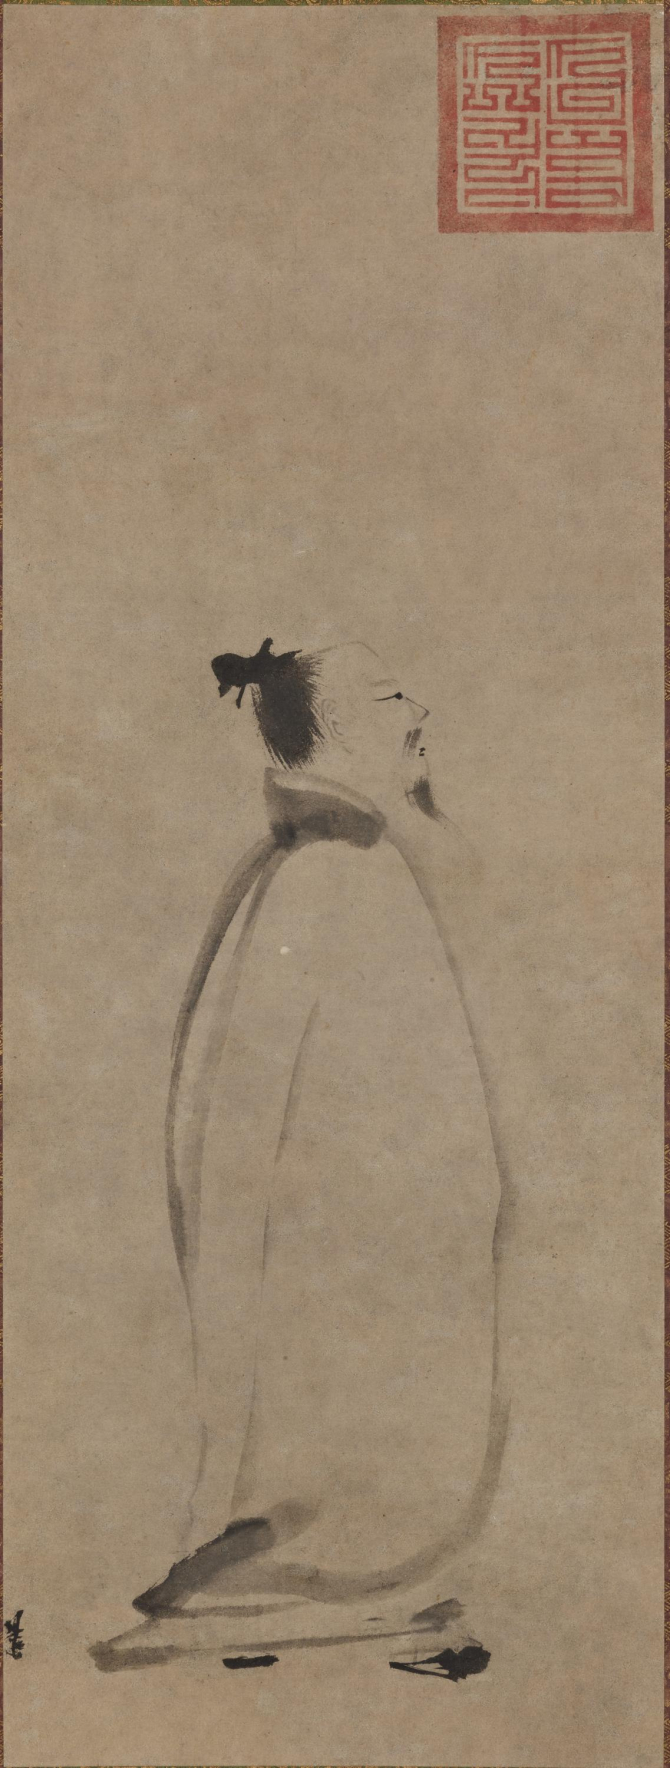 Image of "The Poet Li Bai Strolling"